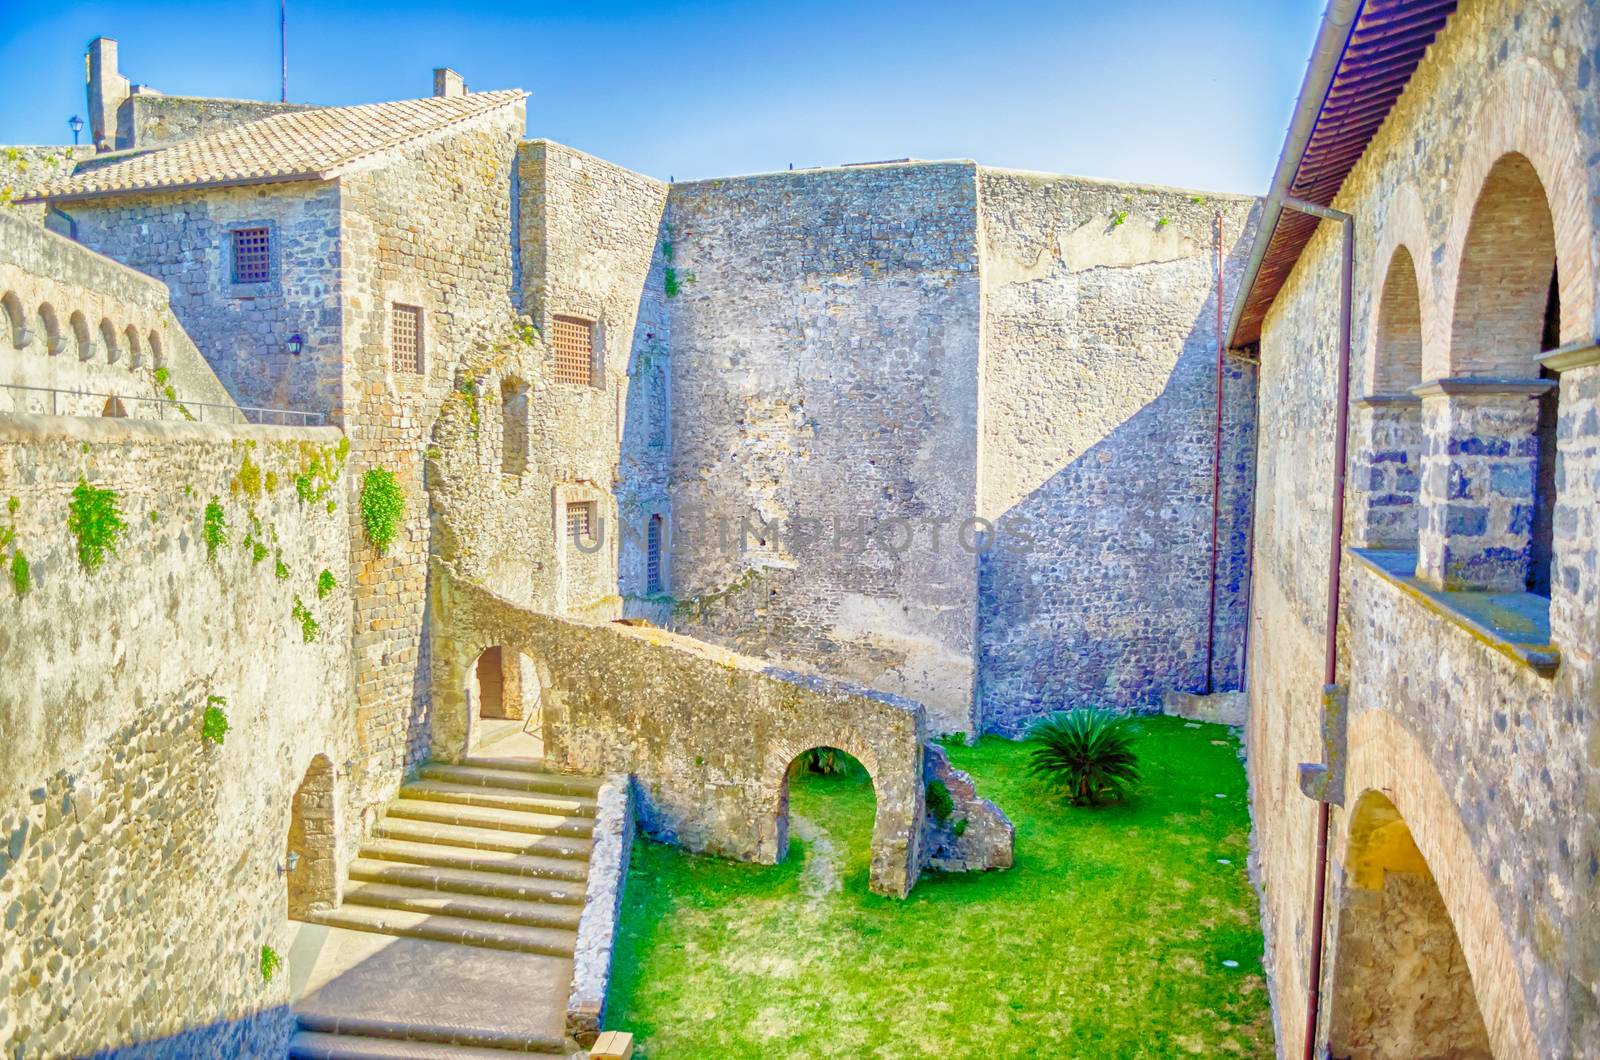 The Odescalchi Castle Inner Courtyard, Bracciano, Italy